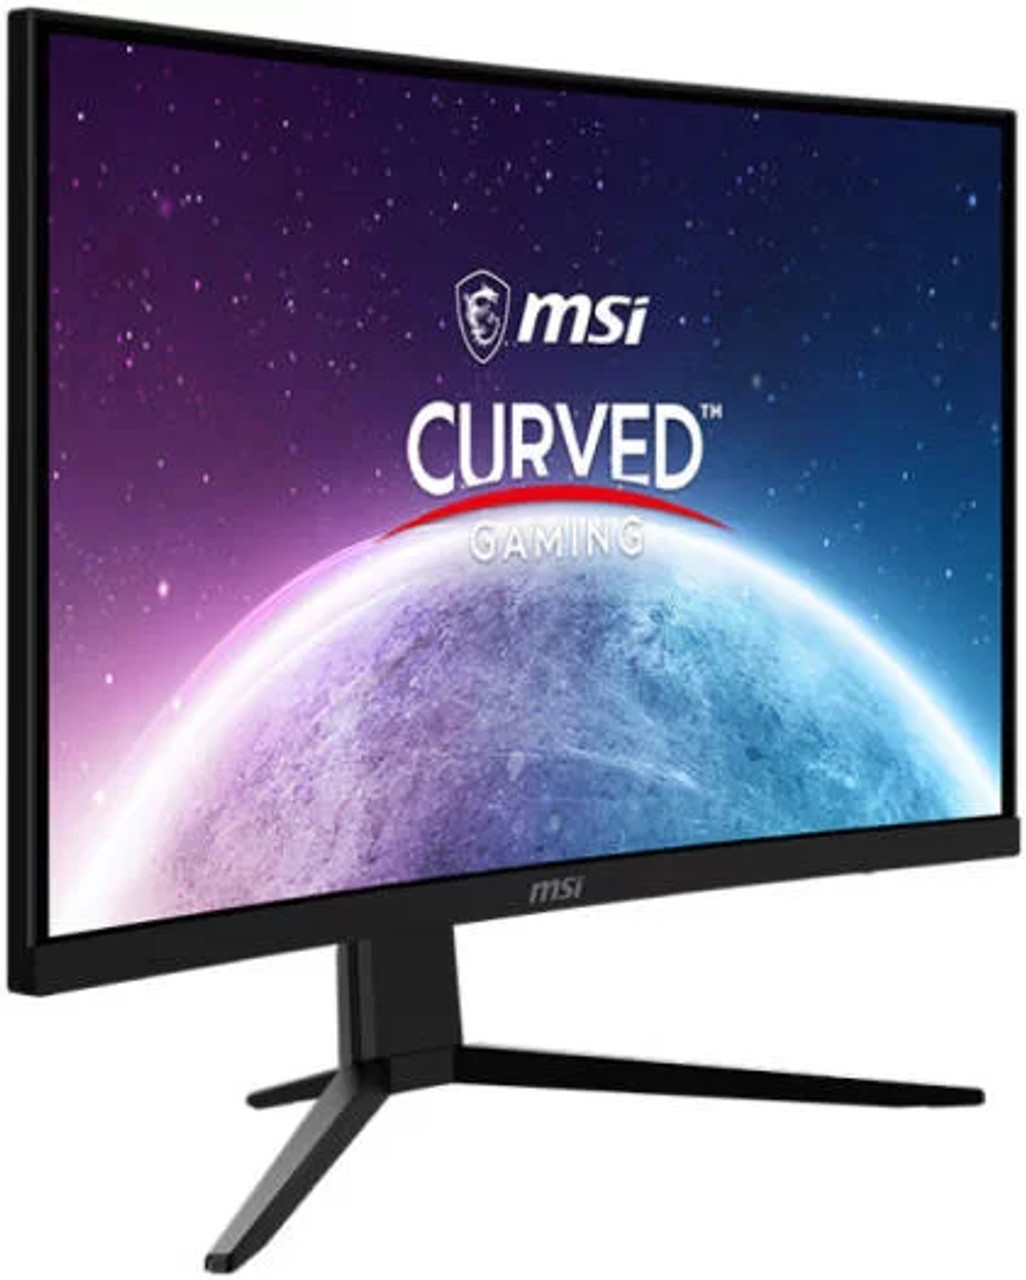 MSI | Gaming FHD G242C 170HZ LEBANON COMPUTERS AYOUB G242C | Curved 23.6″ Monitor|